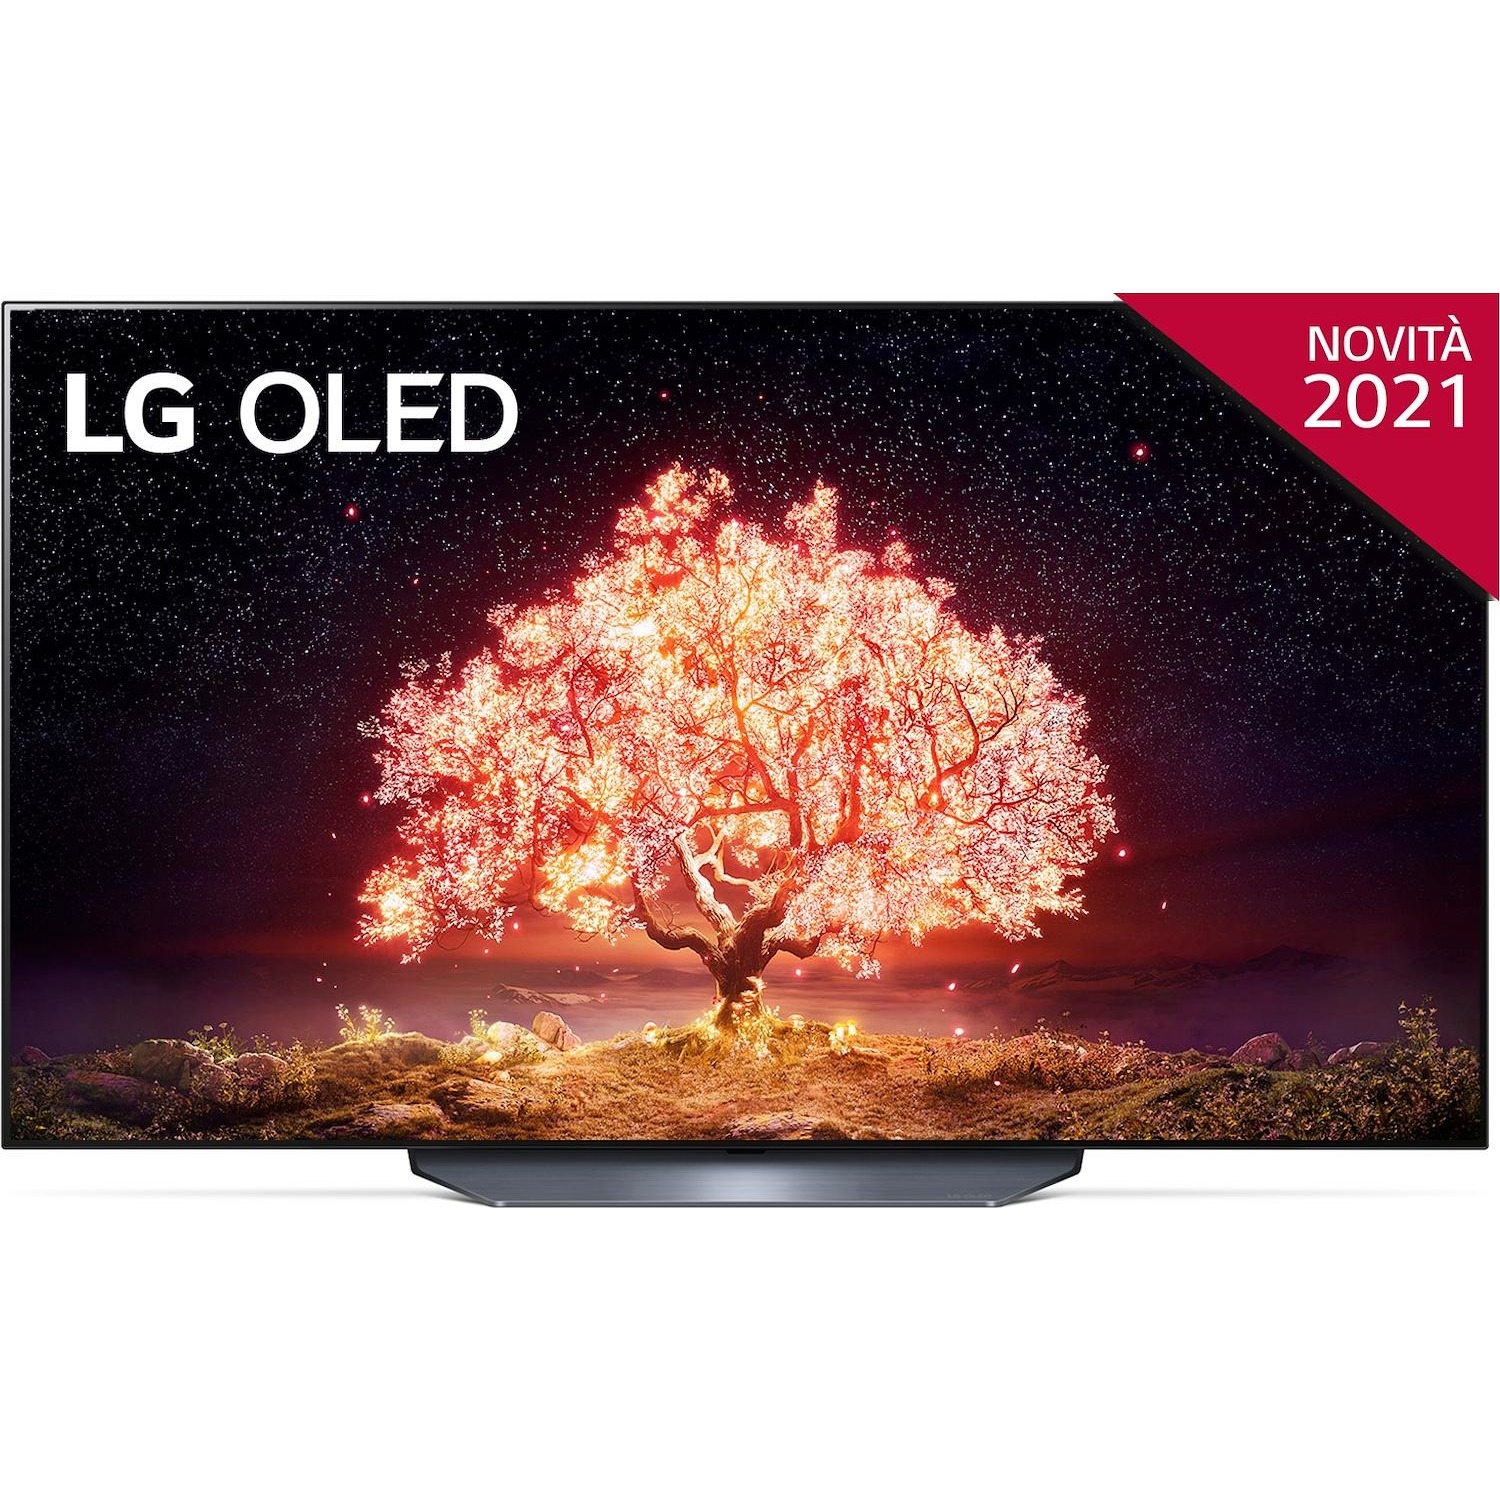 Immagine per TV OLED UHD 4K Smart LG OLED55B16 da DIMOStore